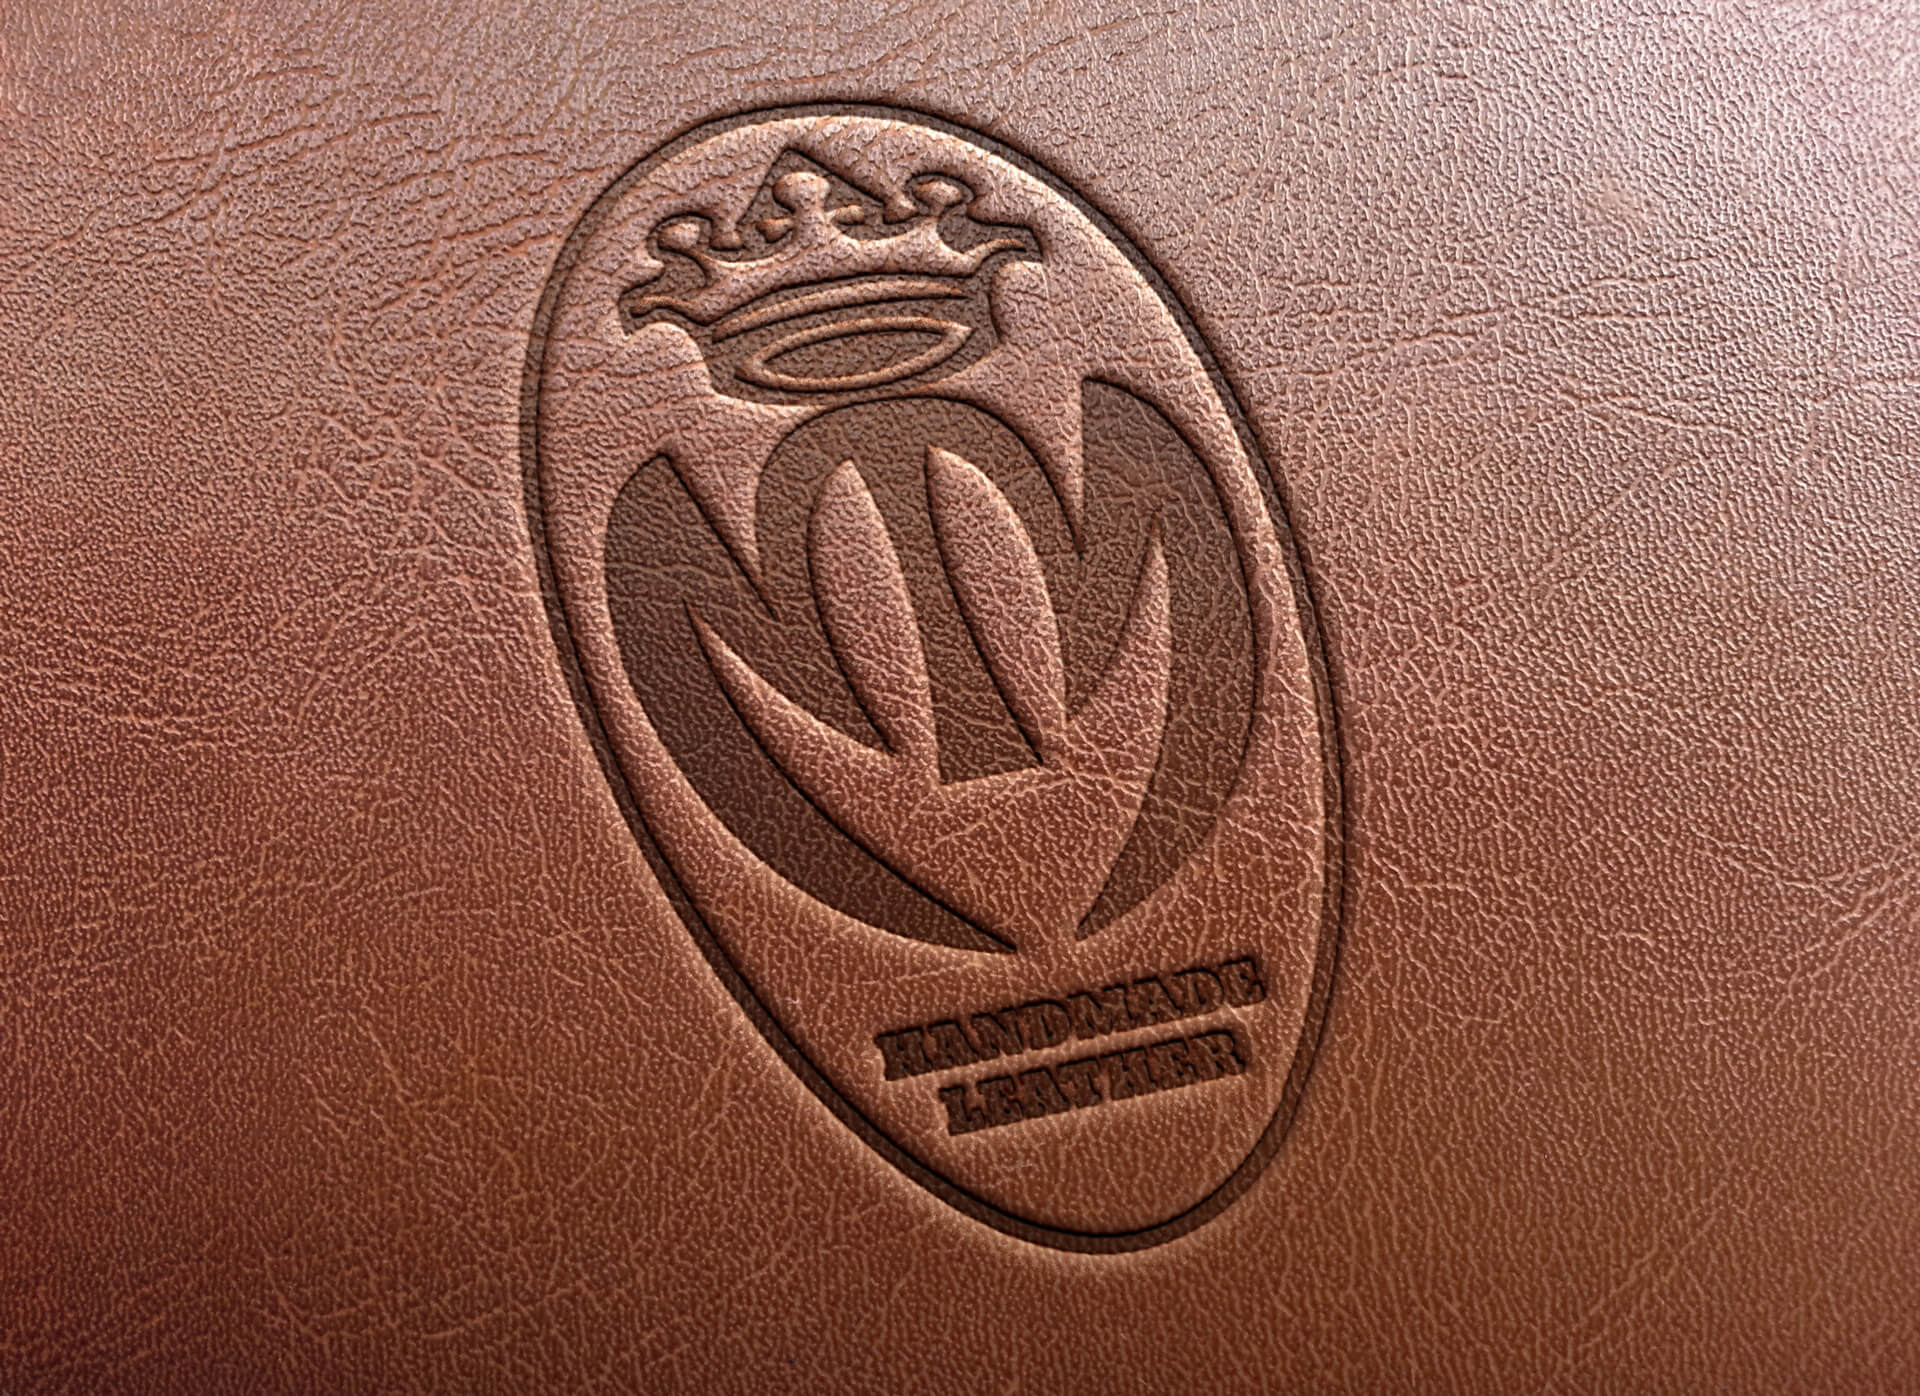 Obućarska radnja Miloš - Logo